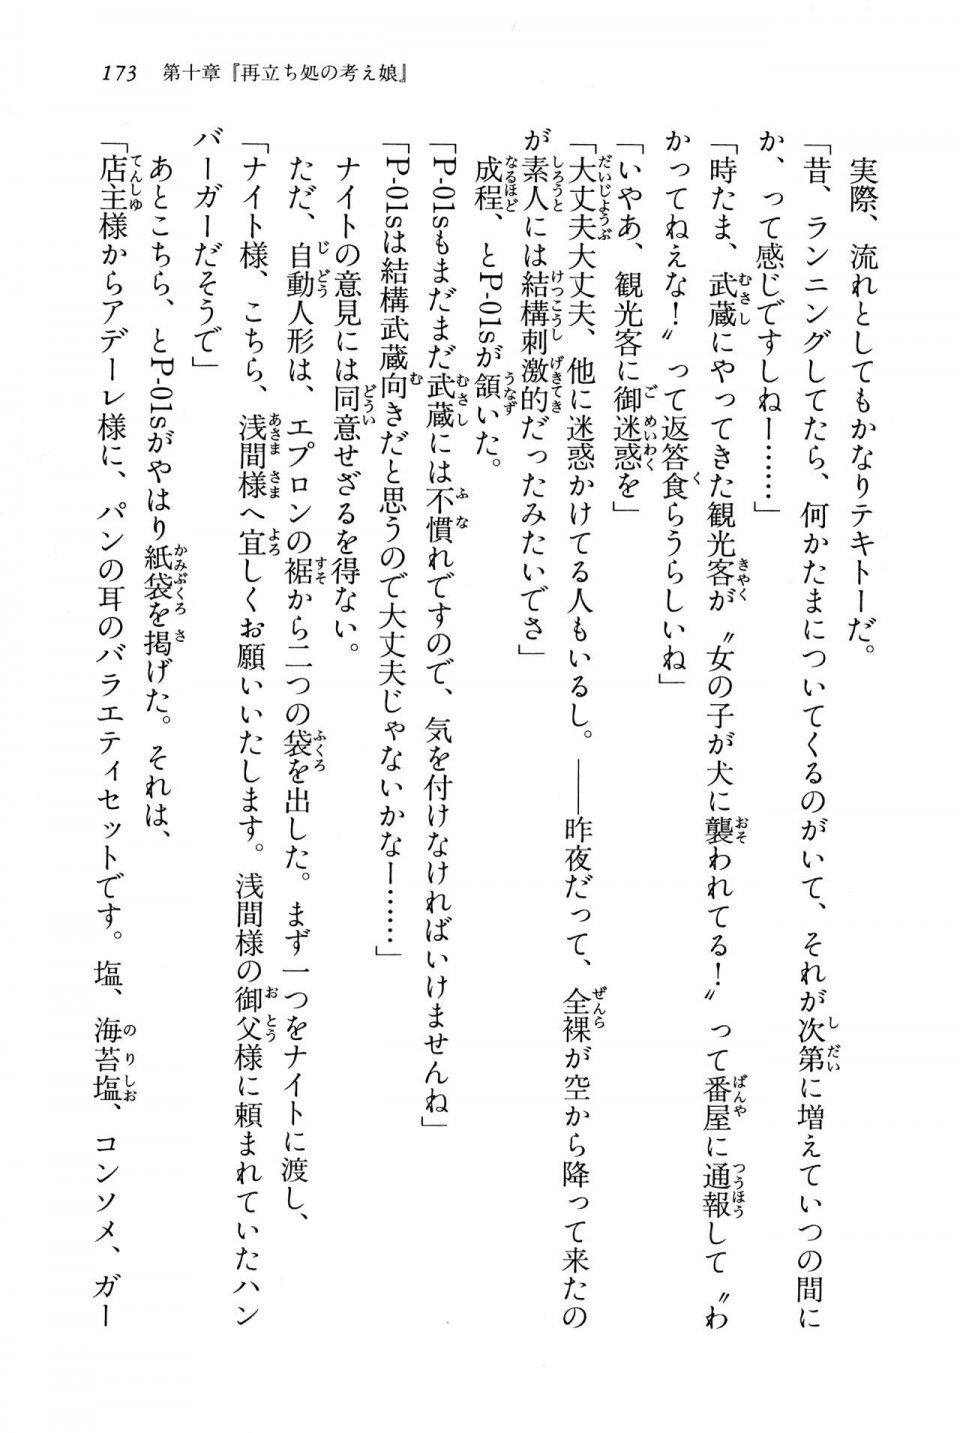 Kyoukai Senjou no Horizon BD Special Mininovel Vol 6(3B) - Photo #177